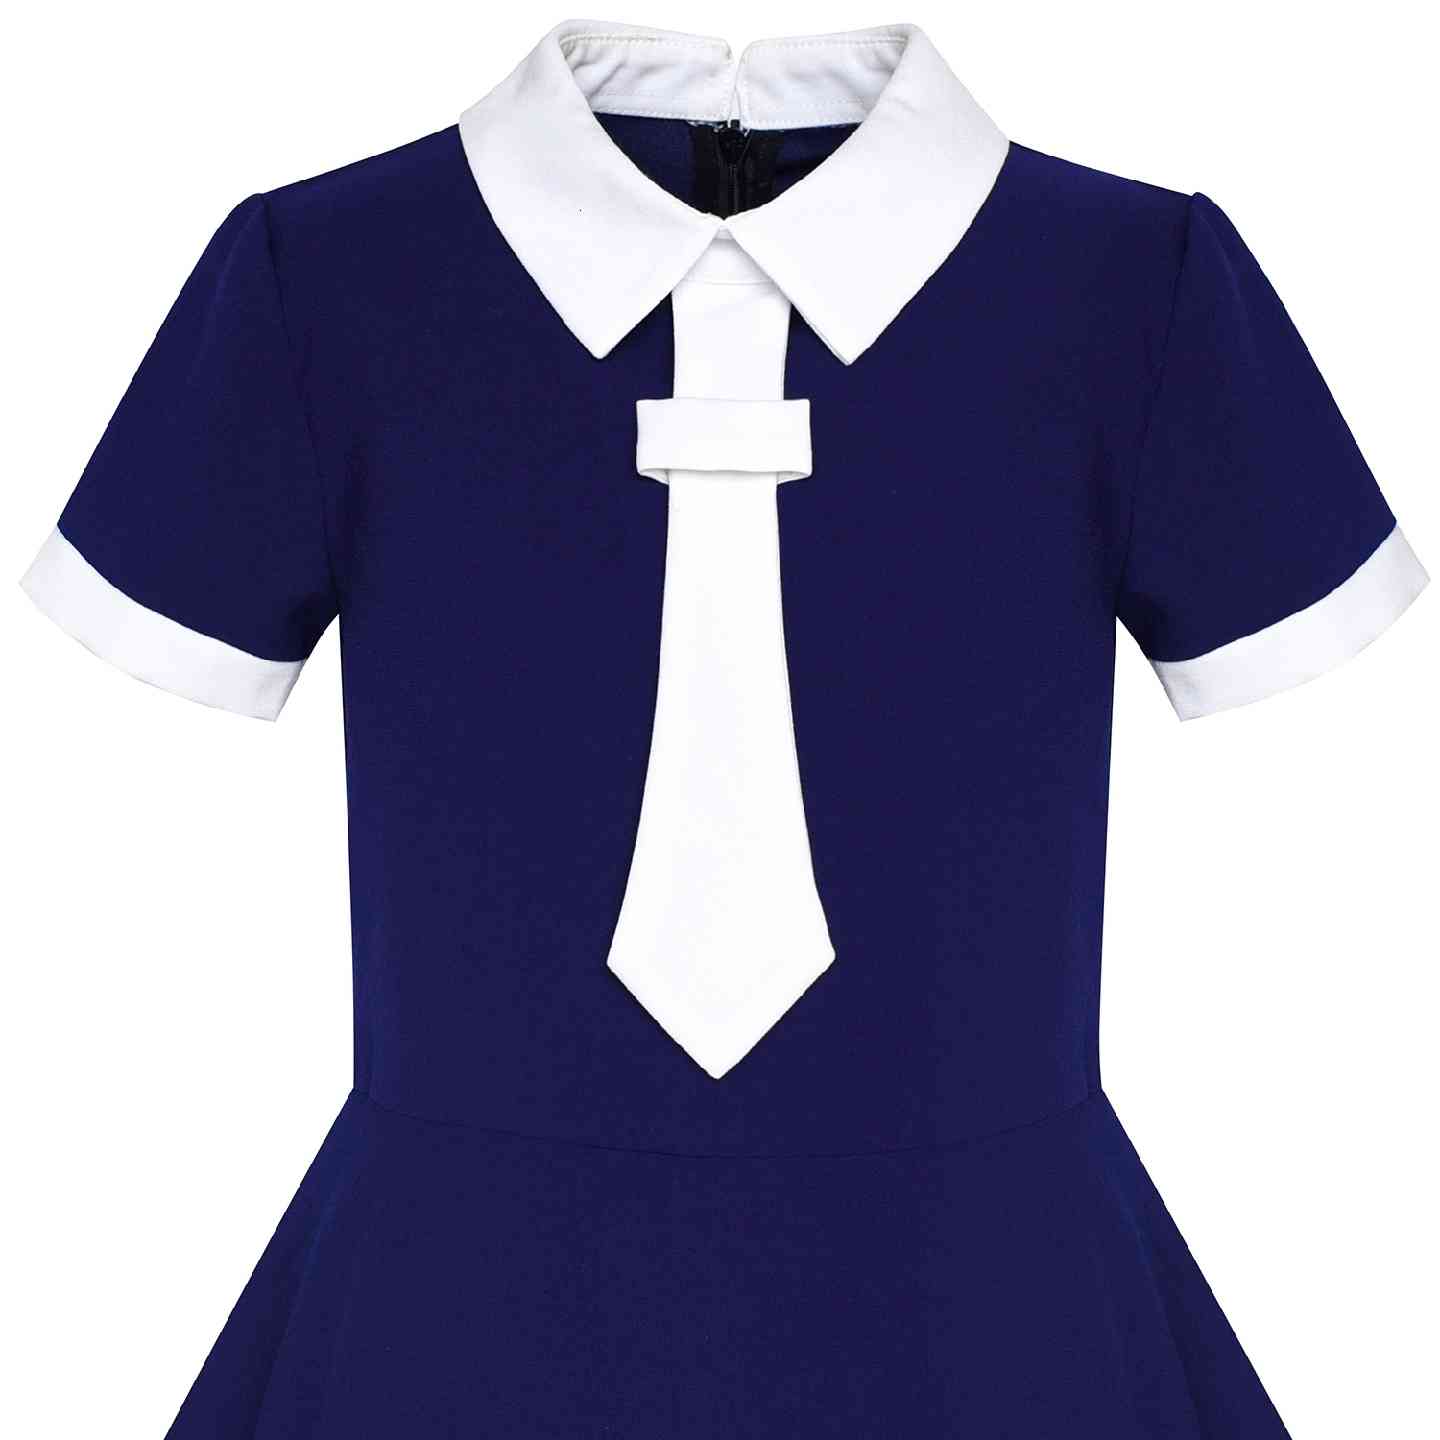 AINIFU Girls School Uniform Dresses White Navy Collar Princess Dress 